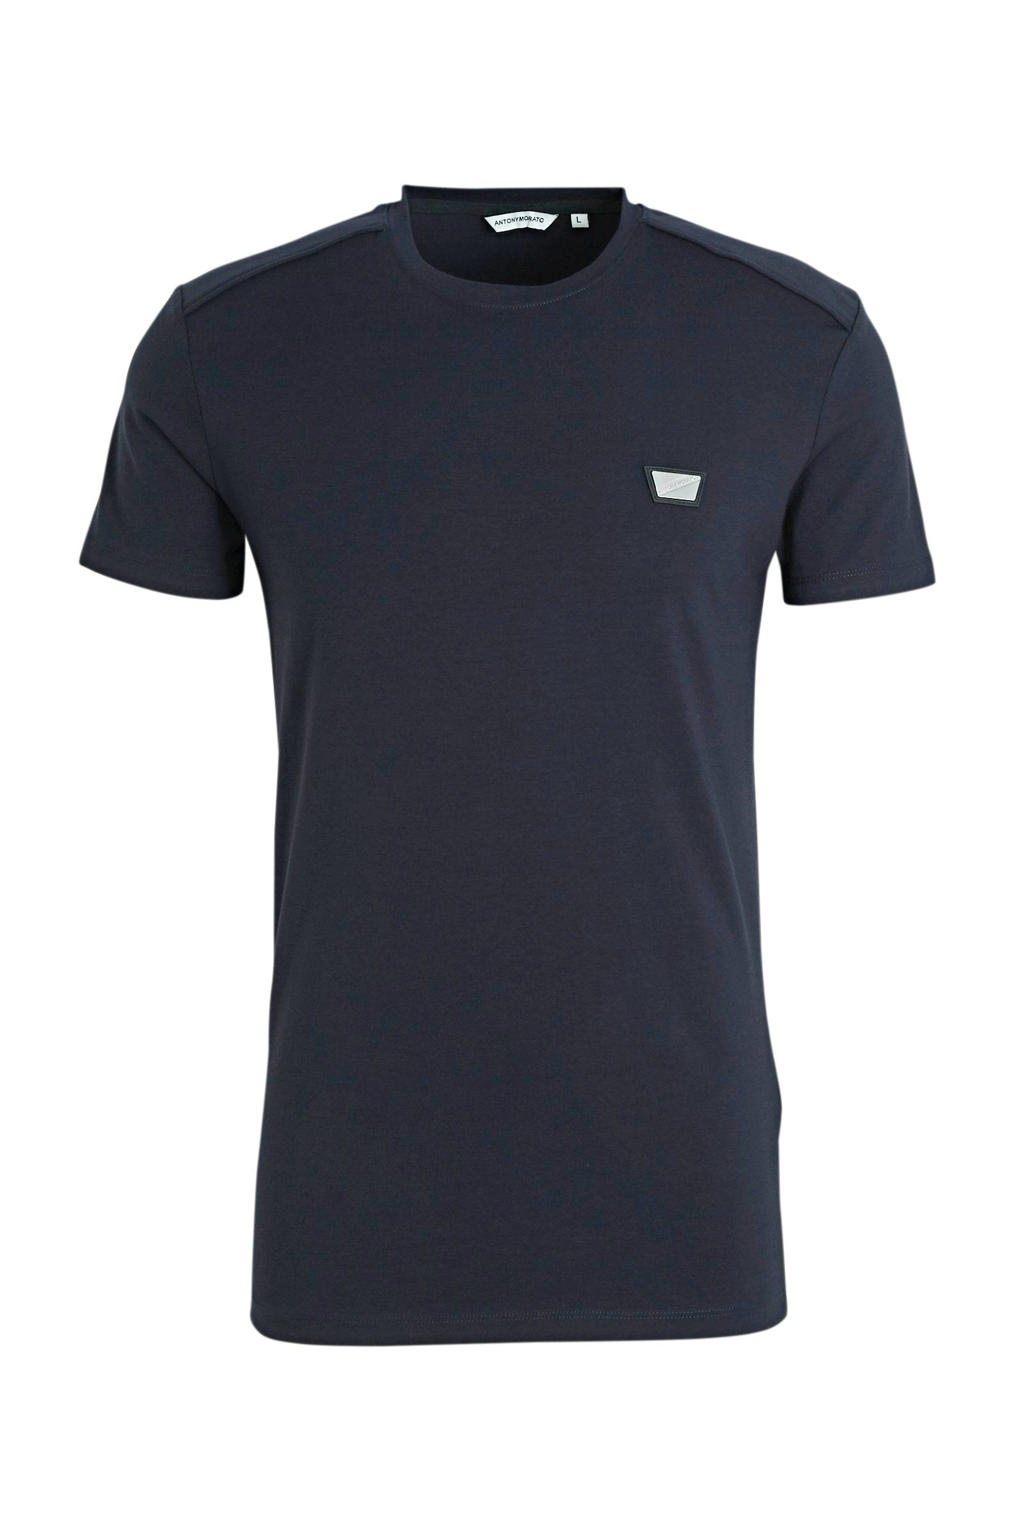 Antony Morato T-shirt donkerblauw